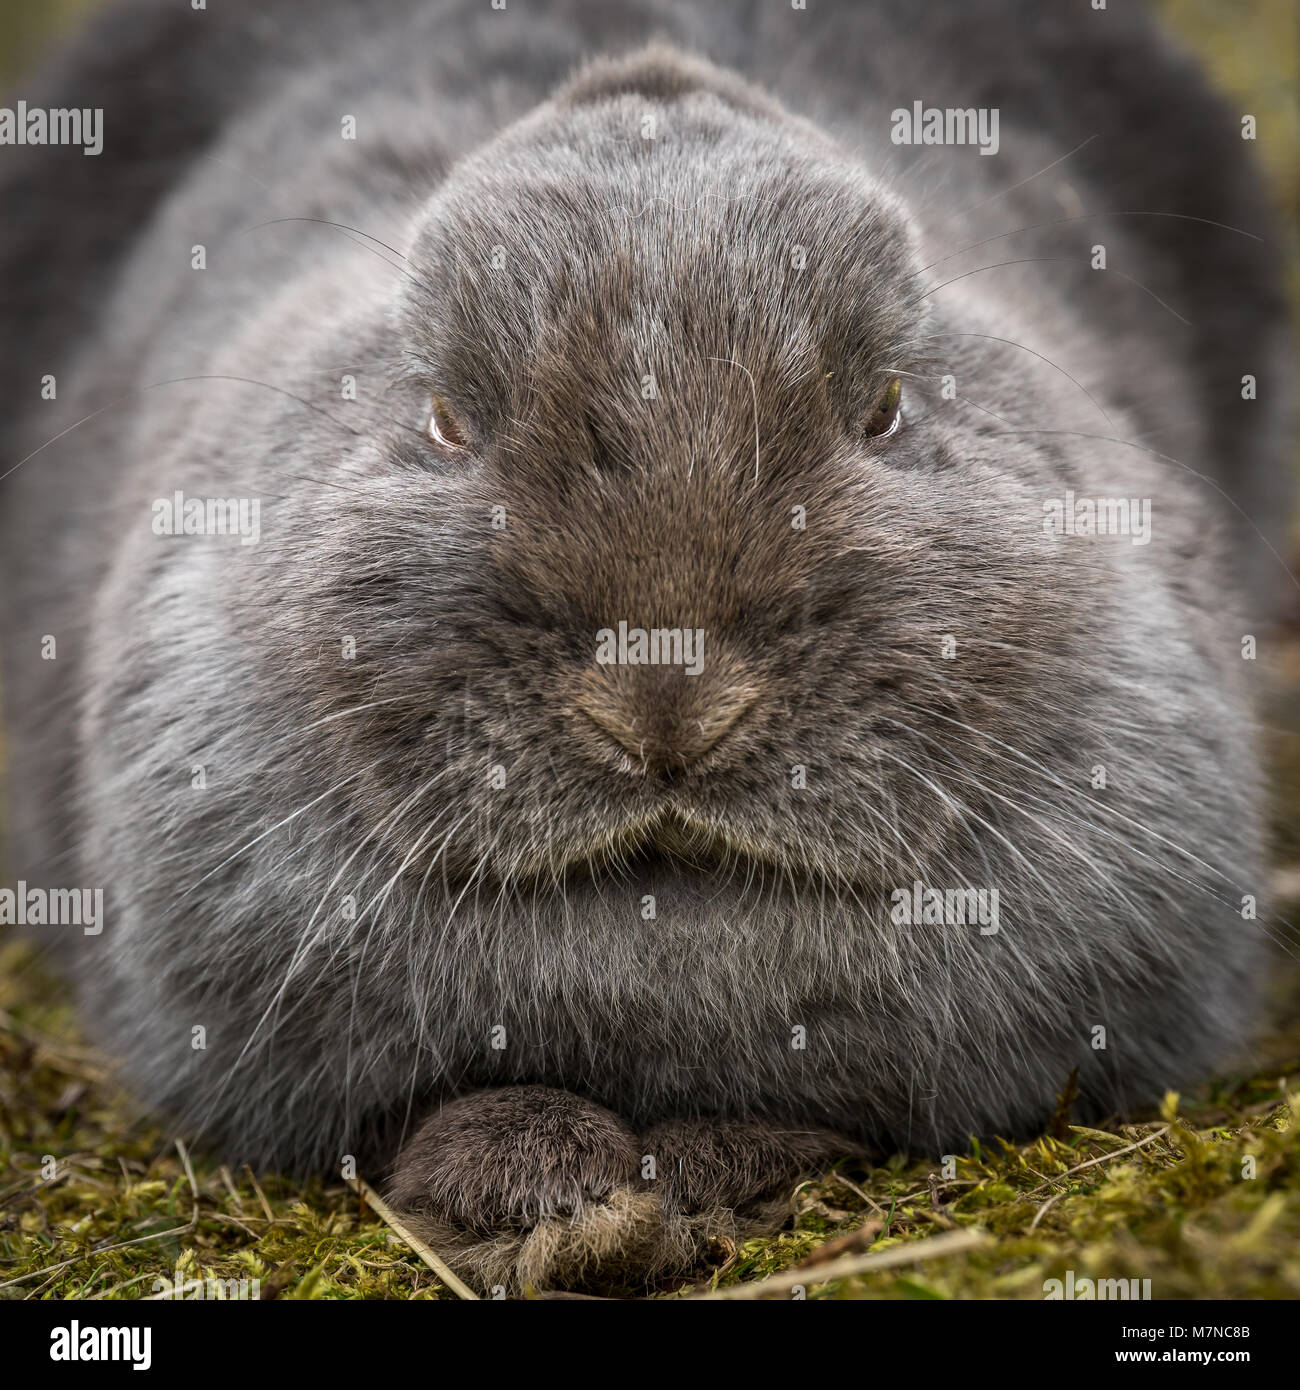 A grey dwarf rabbit taking in the grass Stock Photo